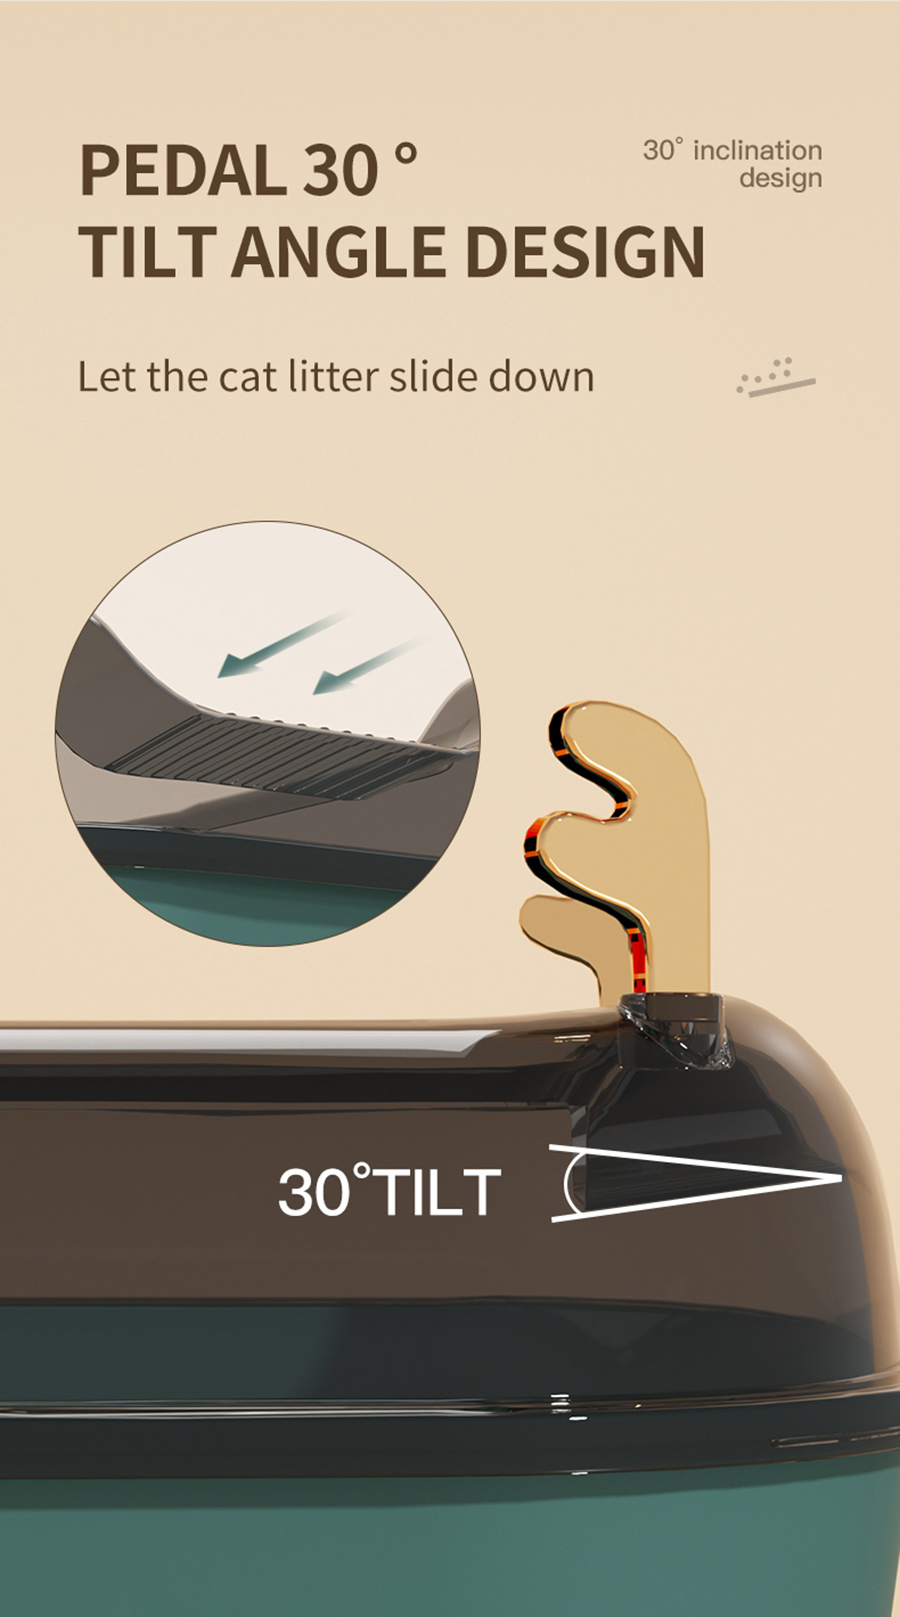 Semi closed deer design cat litter basin (၆)ခု၊